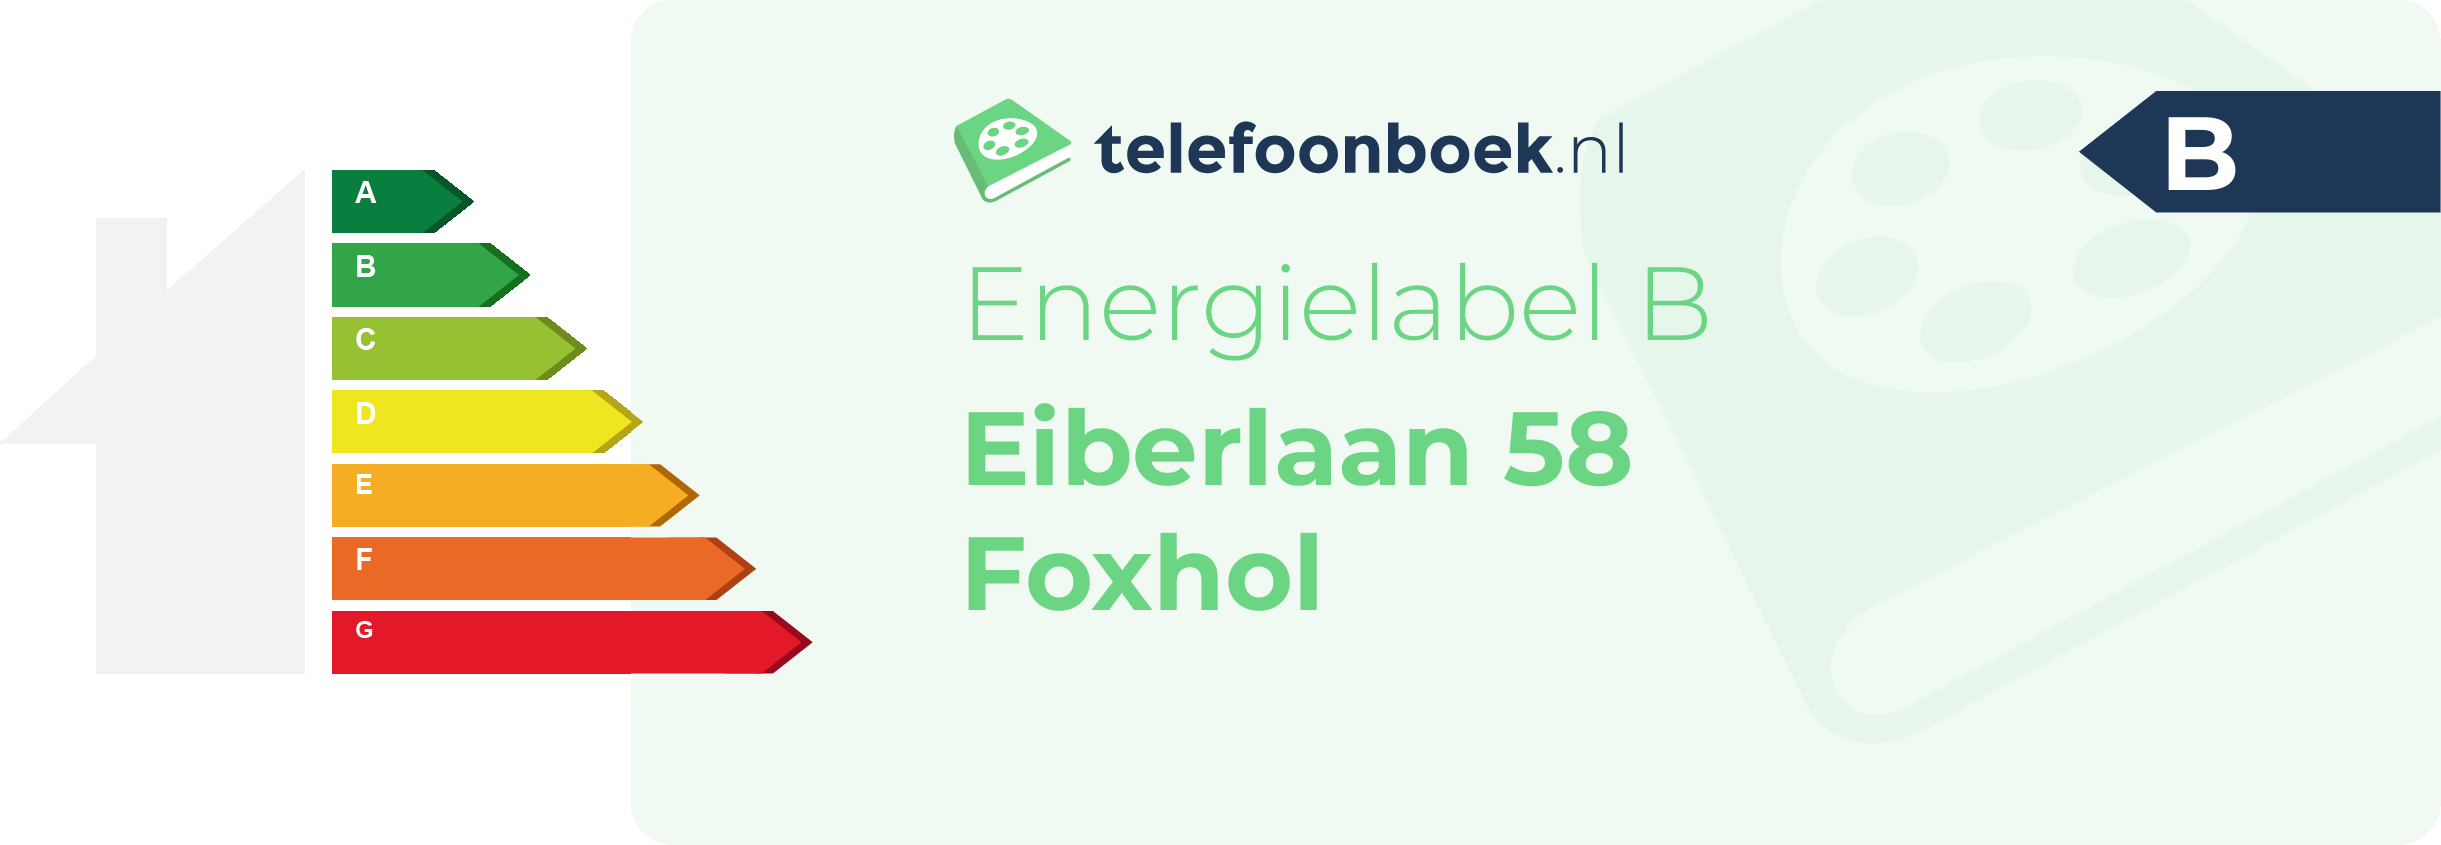 Energielabel Eiberlaan 58 Foxhol